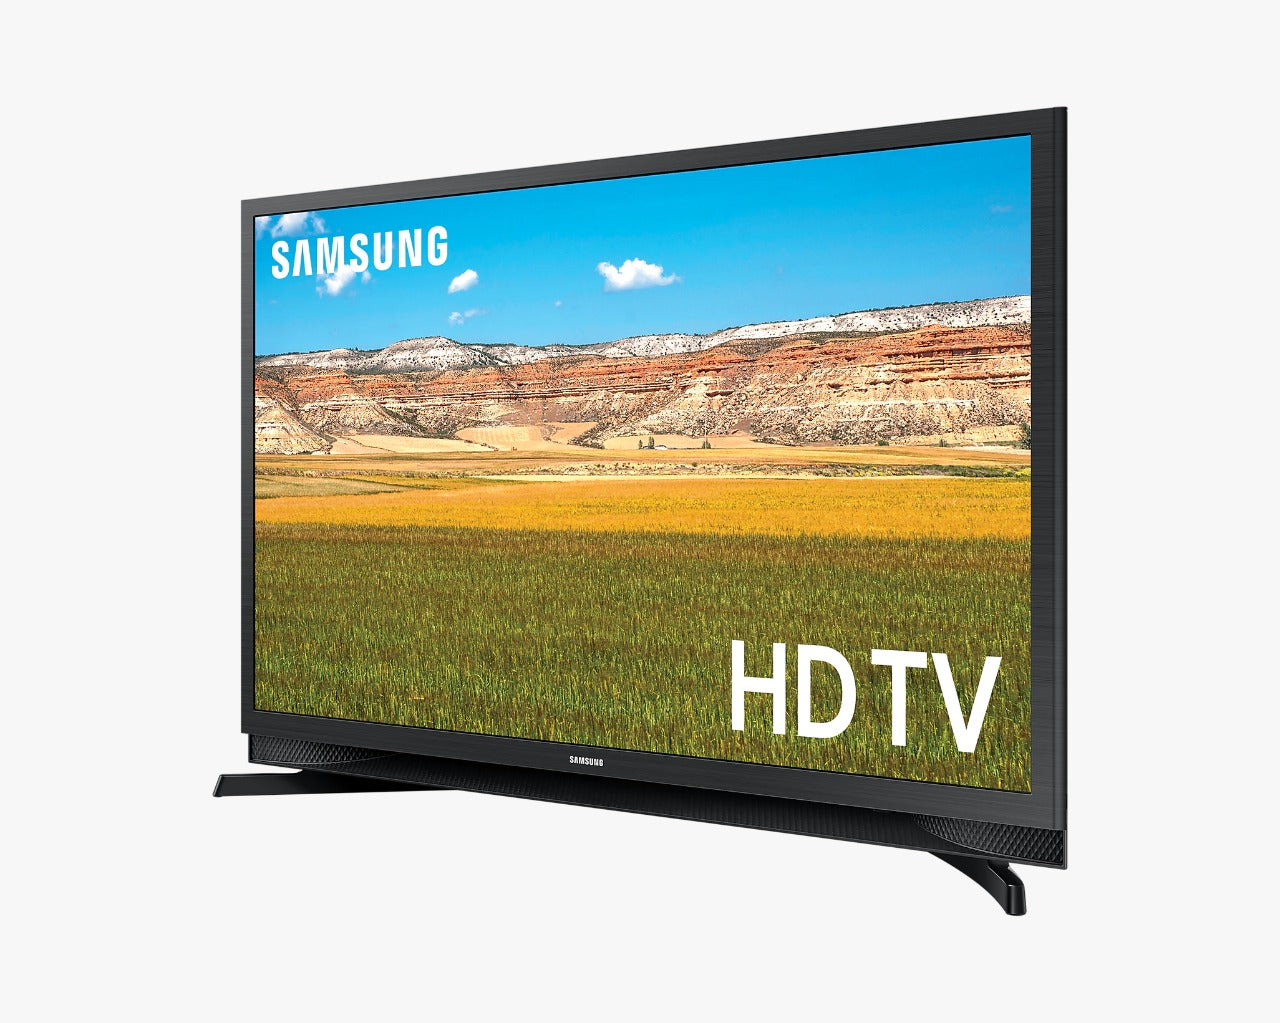 Samsung 80cm (32") T4900 Smart HD TV